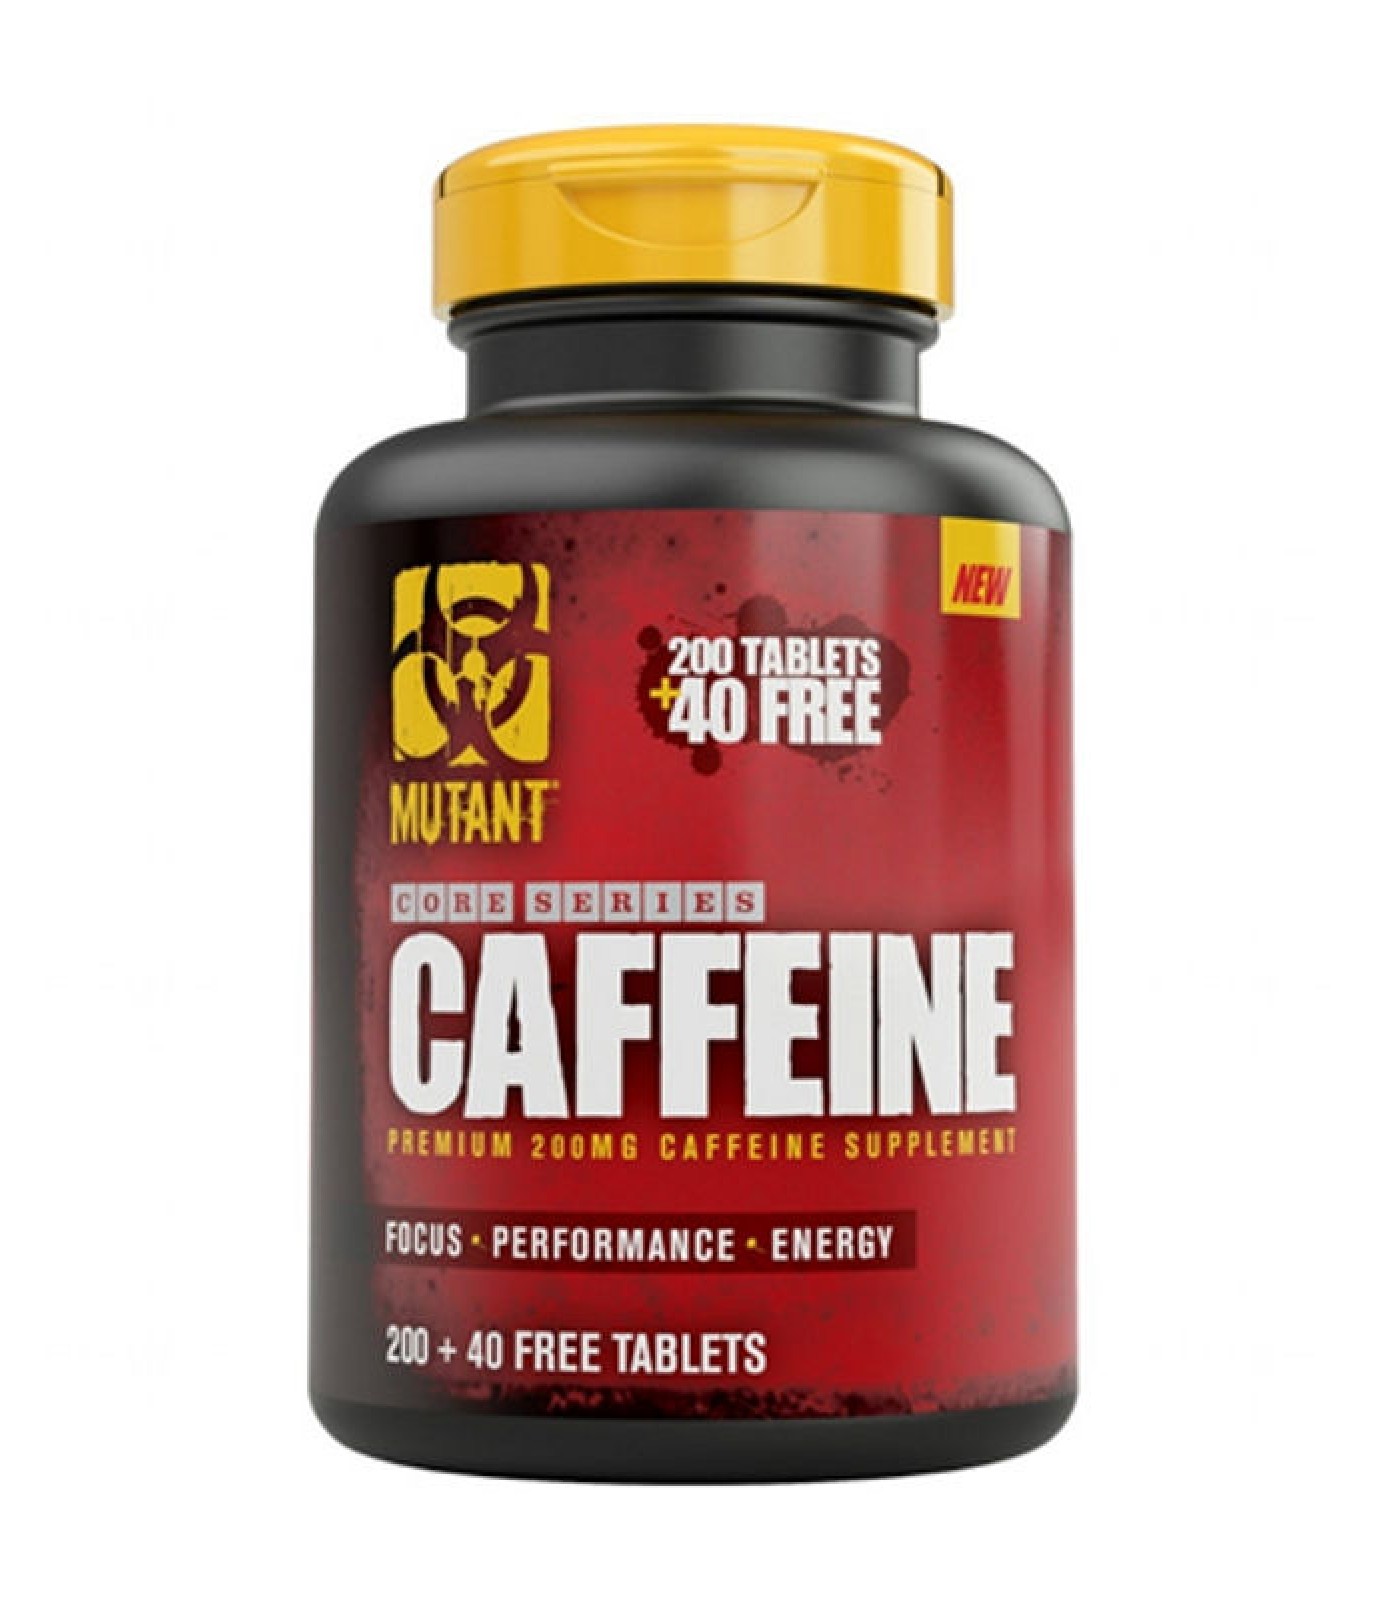 MUTANT - CAFFEINE Premium 200mg / 200tabs. + 40 FREE tabs